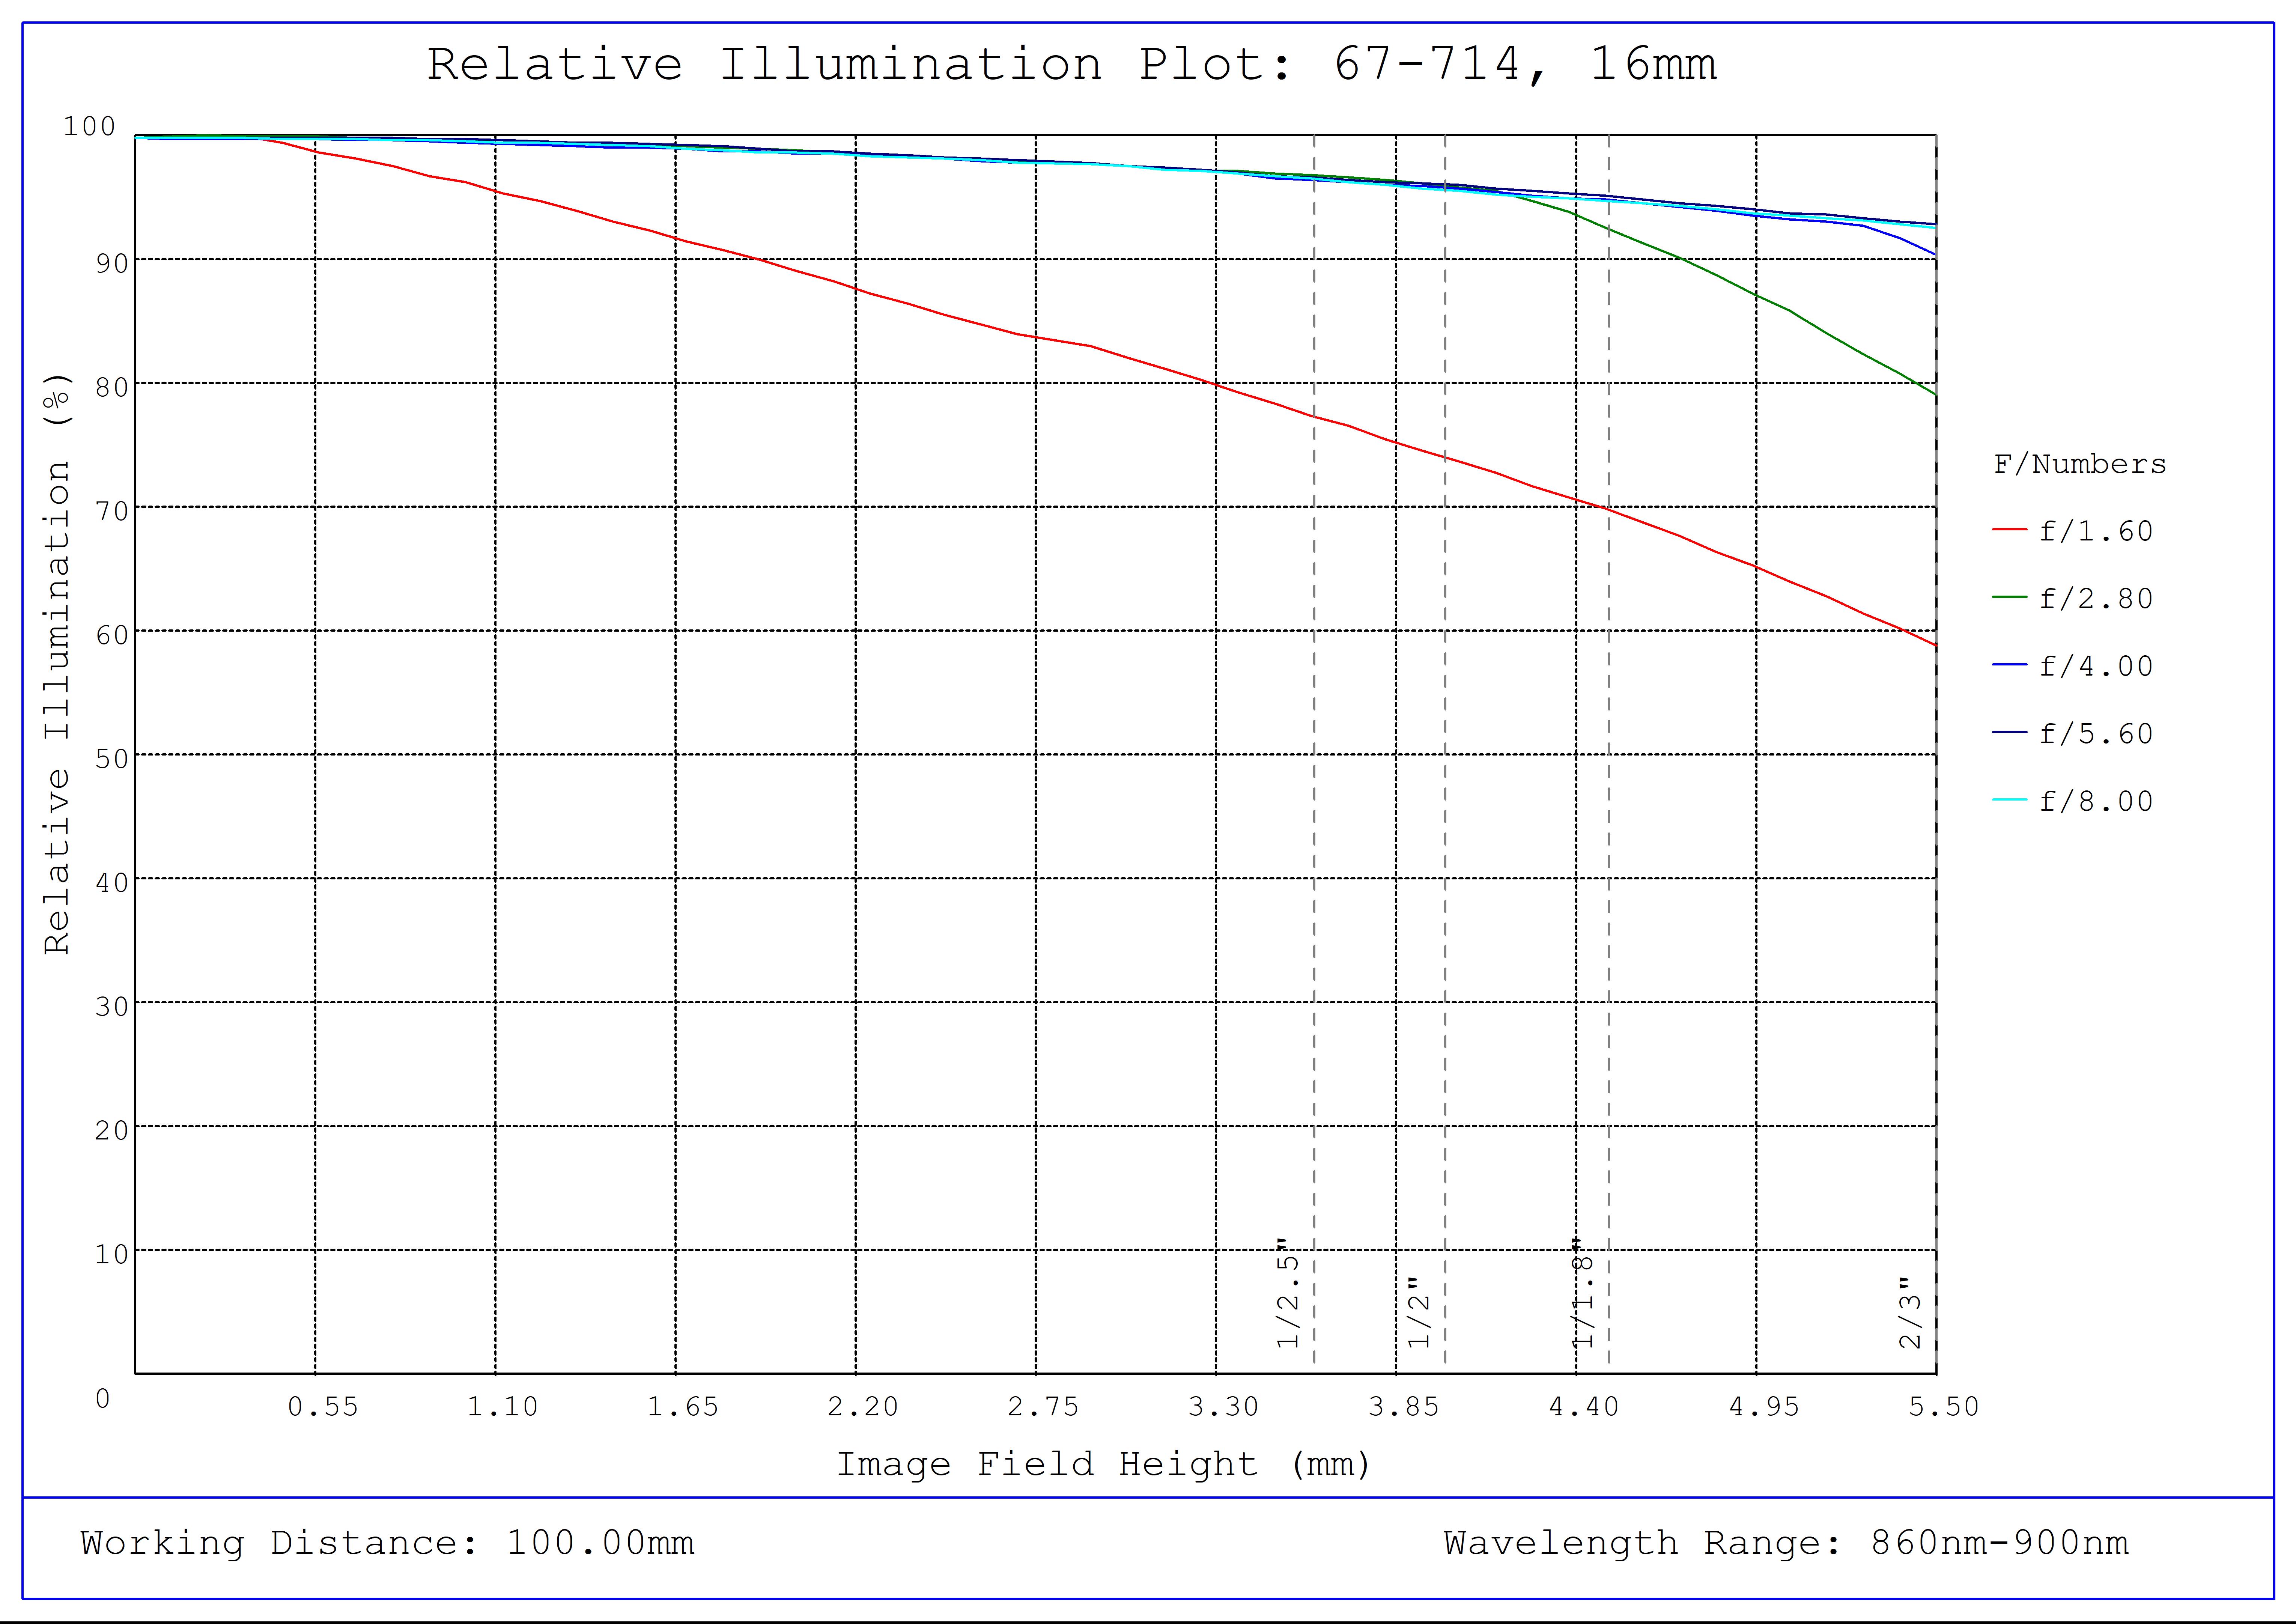 #67-714, 16mm C VIS-NIR Series Fixed Focal Length Lens, Relative Illumination Plot (NIR)